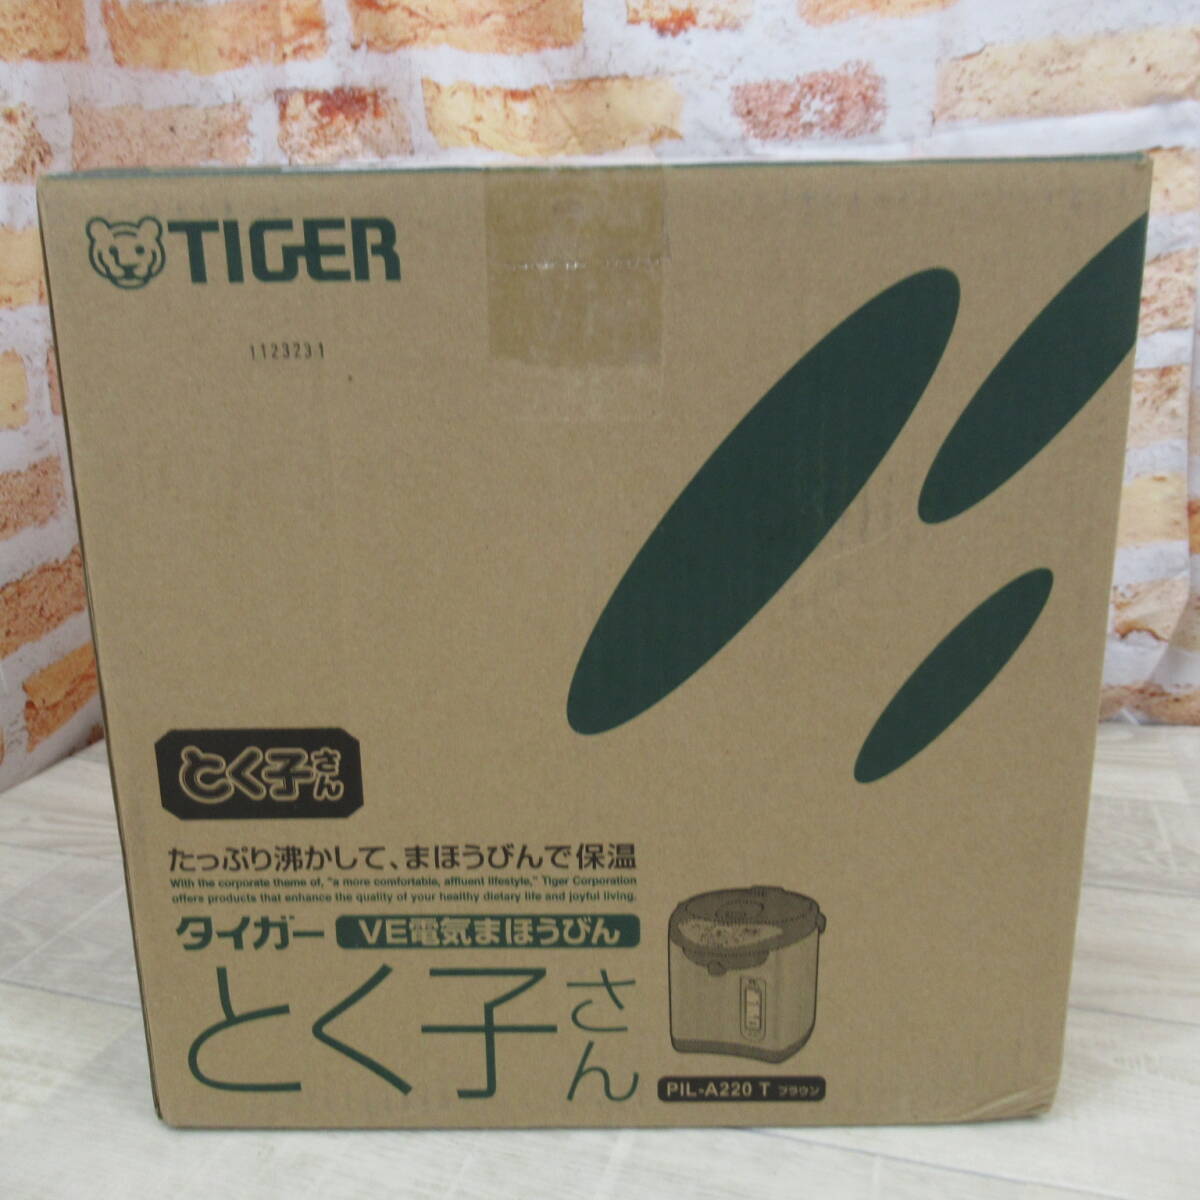 3186PB24[ прекрасный товар ] Tiger термос (TIGER) поттер . пар . электро- таймер VE теплоизоляция ... san 2.2L Brown PIL-A220-T